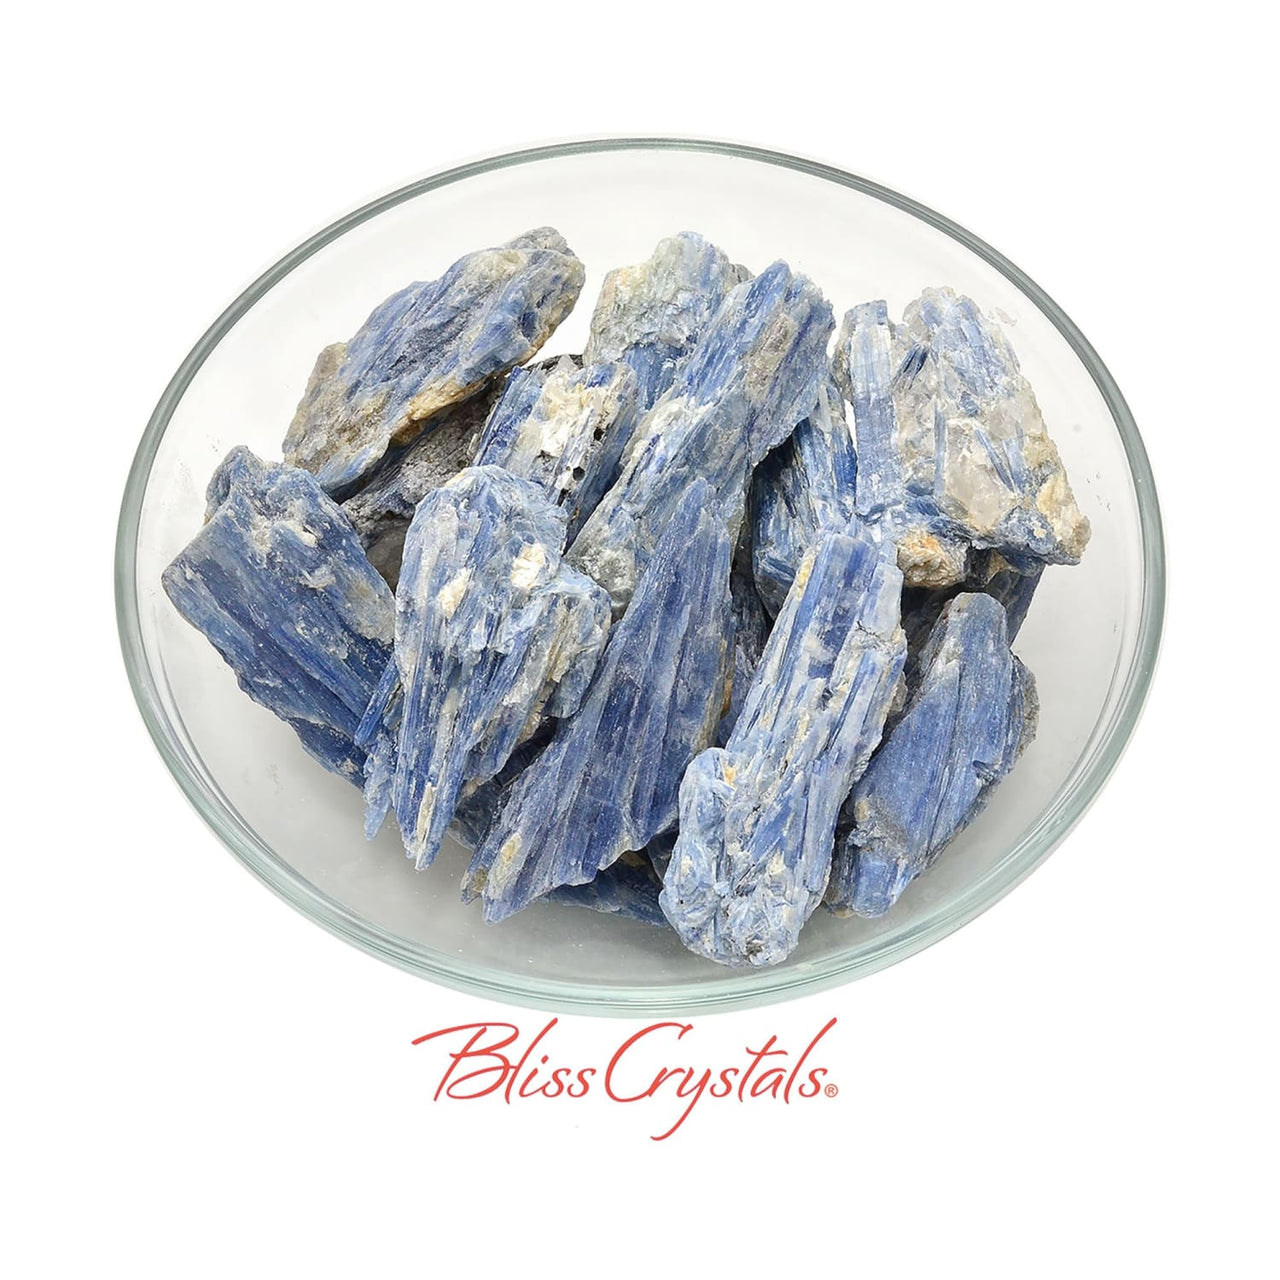 1 Medium BLUE KYANITE Rough Stone Raw Natural Chunk Healing 